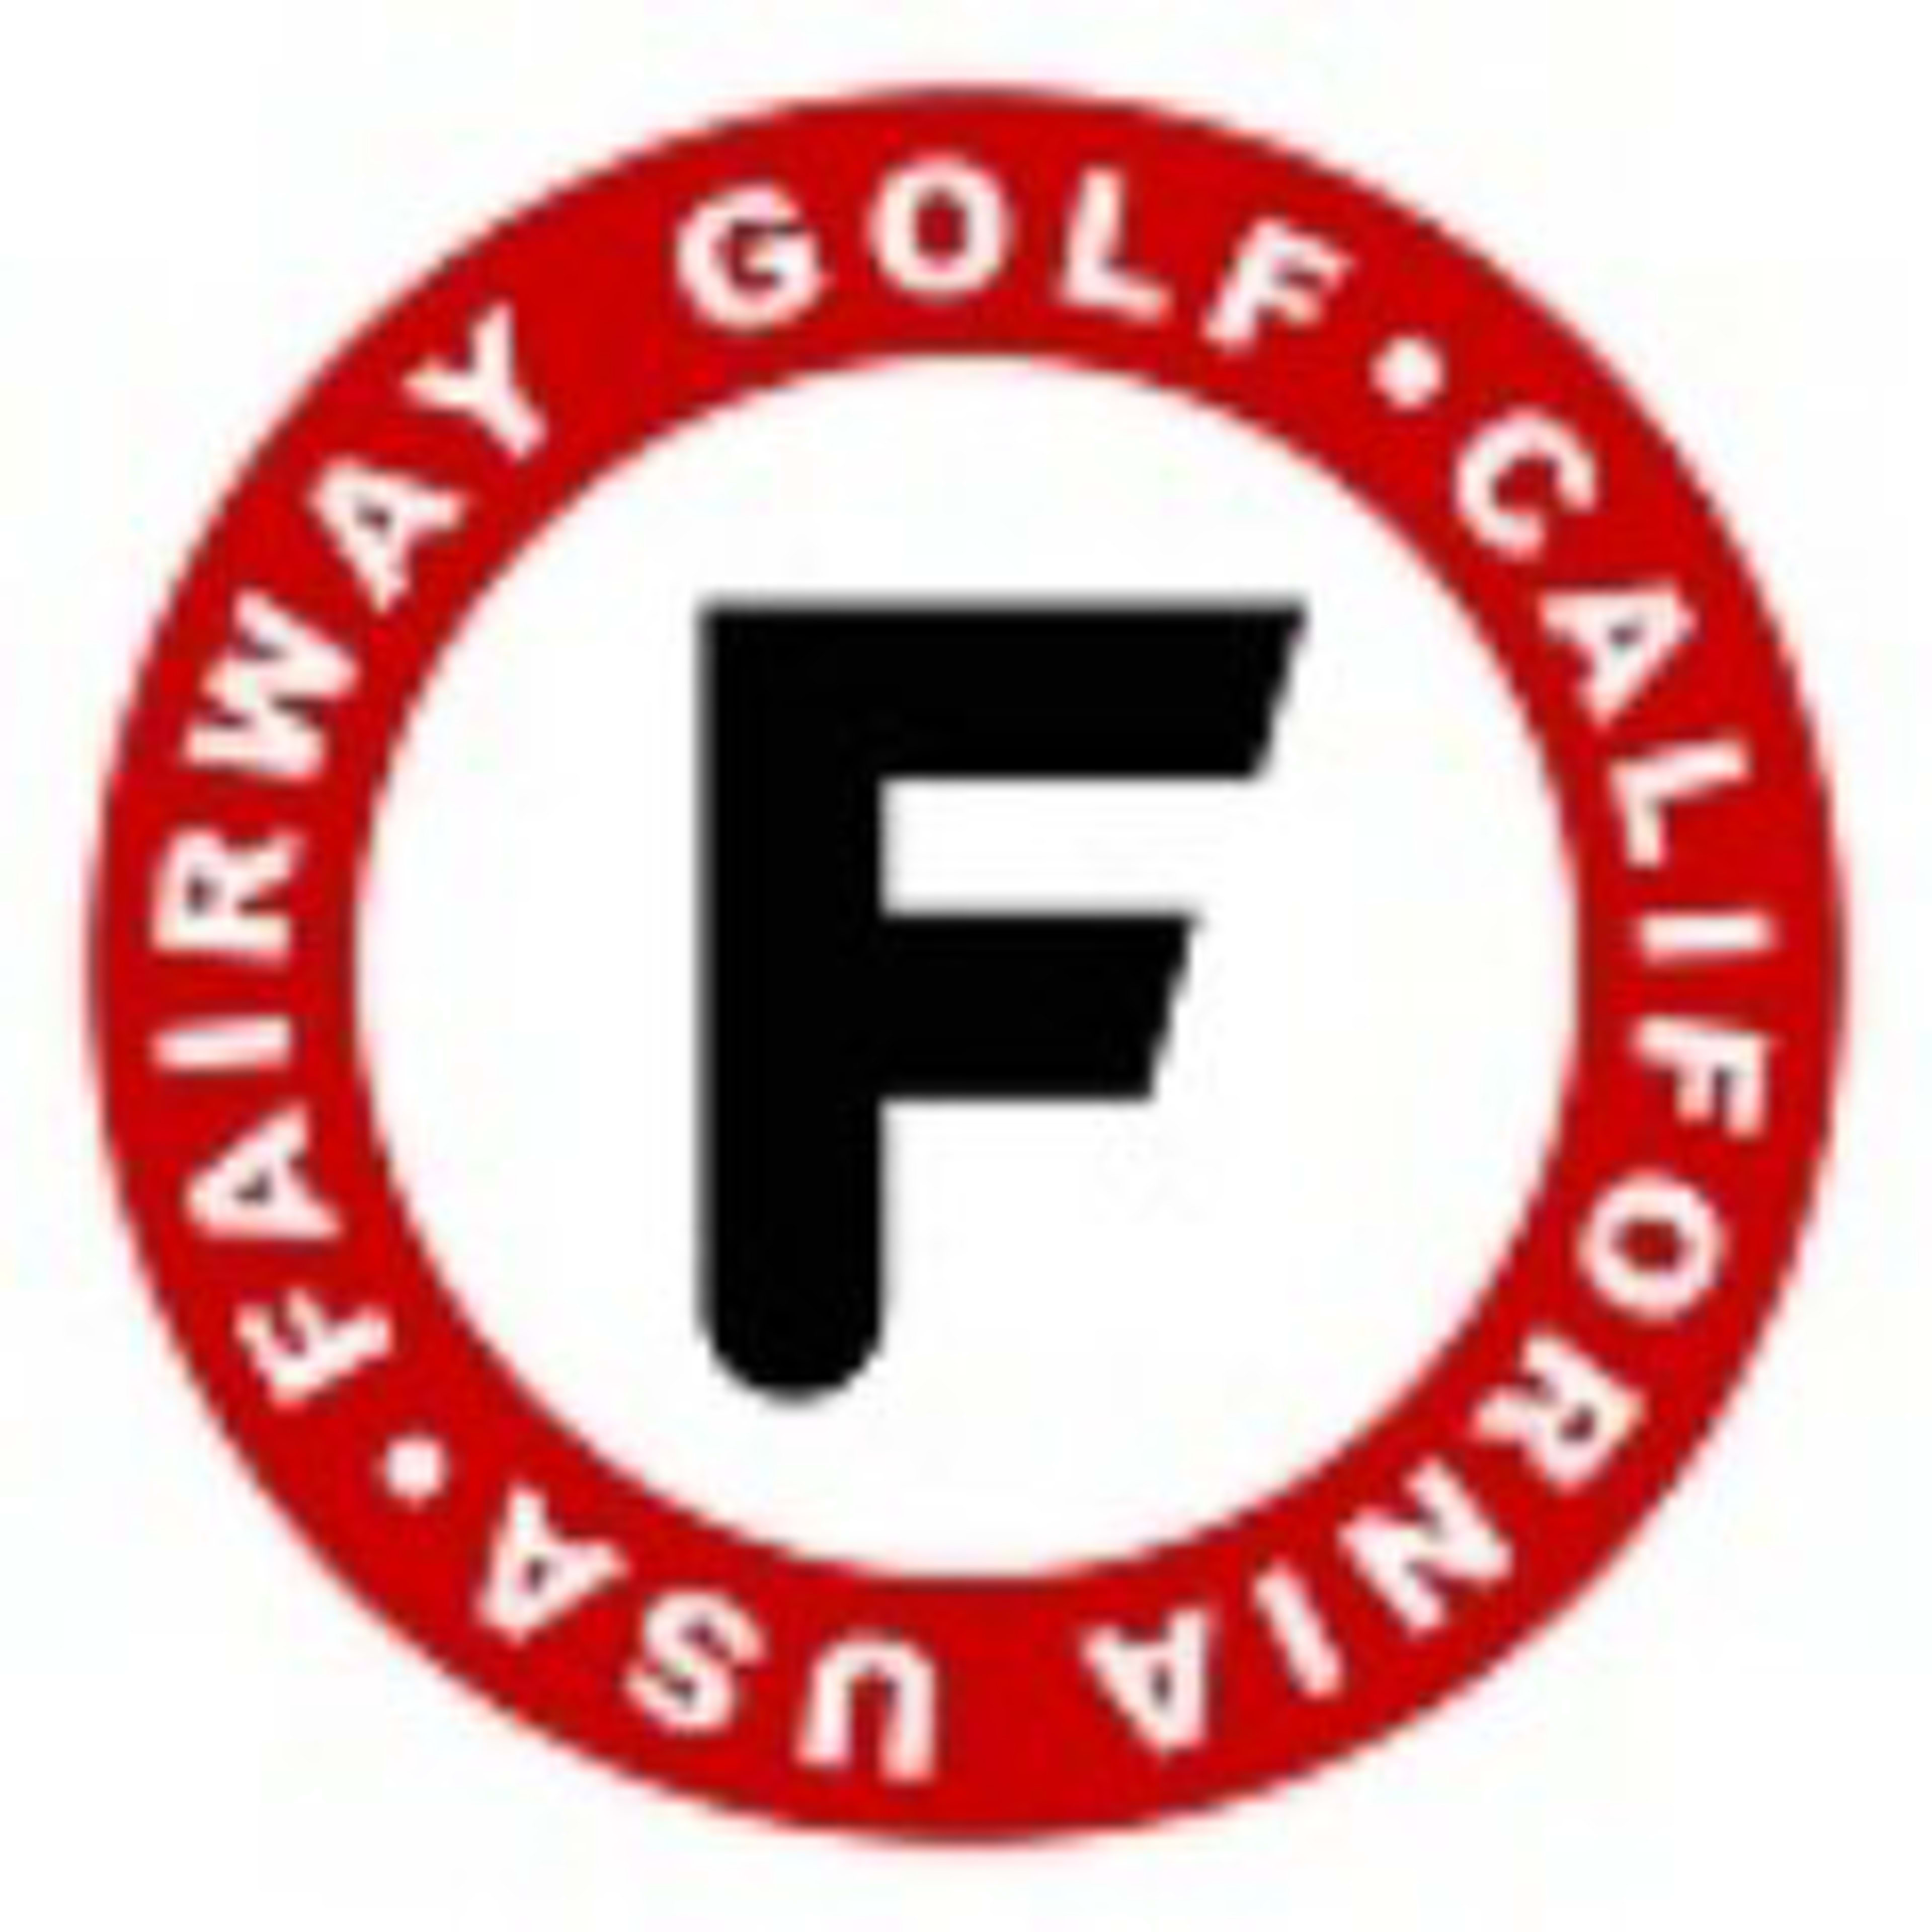 Fairway Golf USA Code